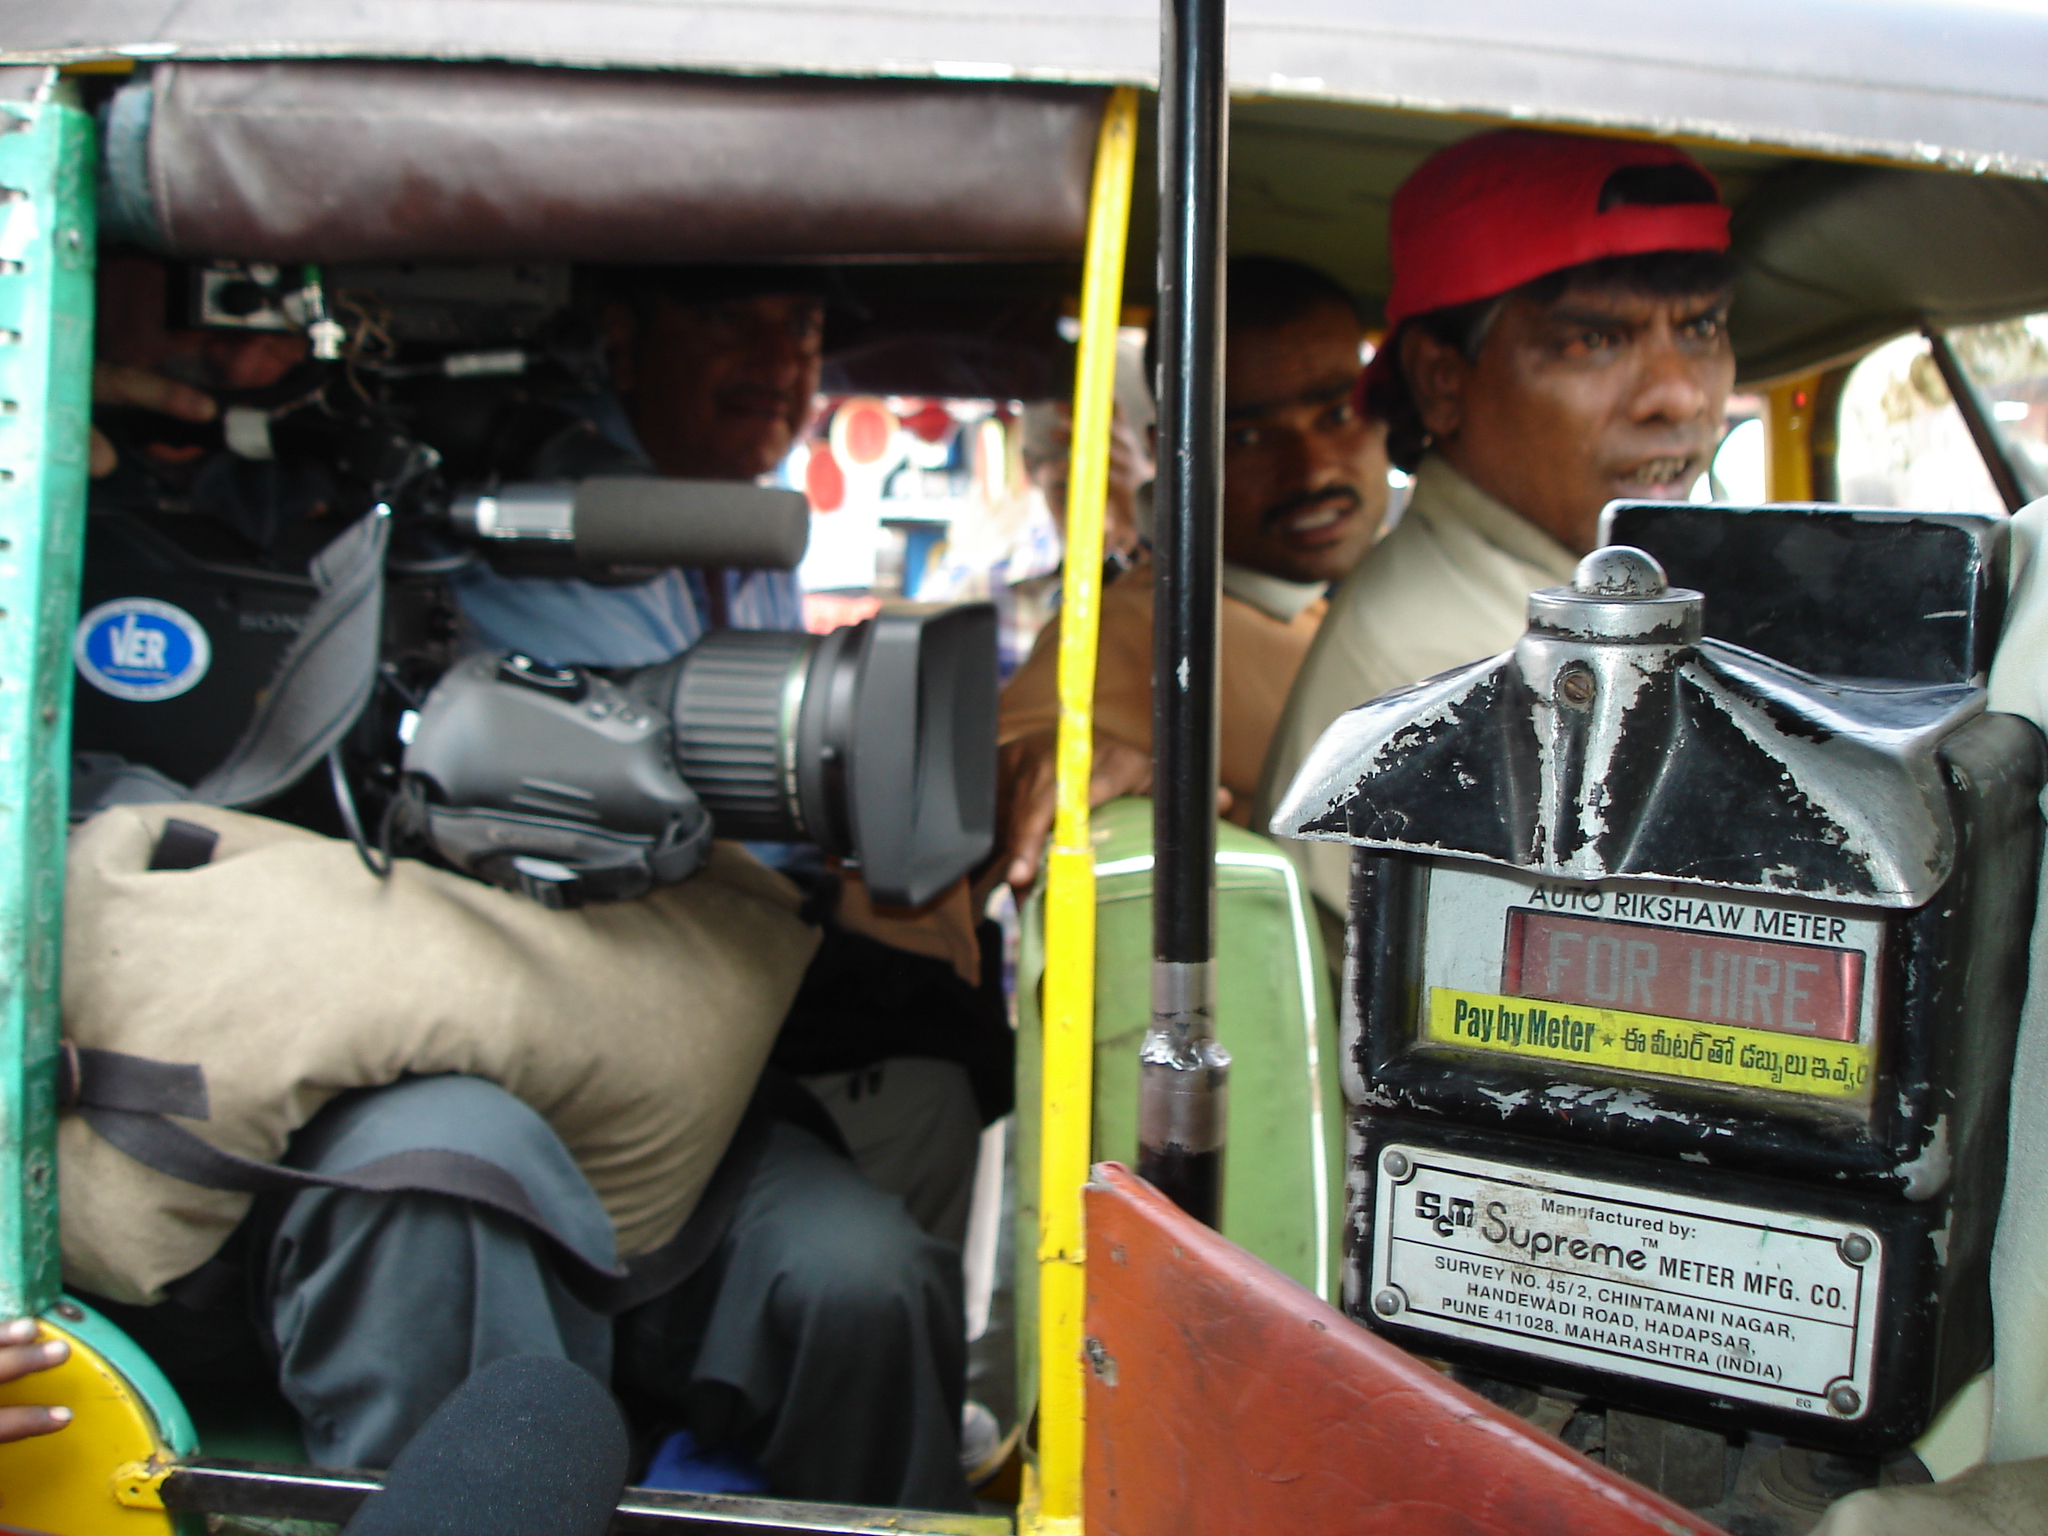 Impromptu shots in Hyderabad, India in side-by-side rickshaws.